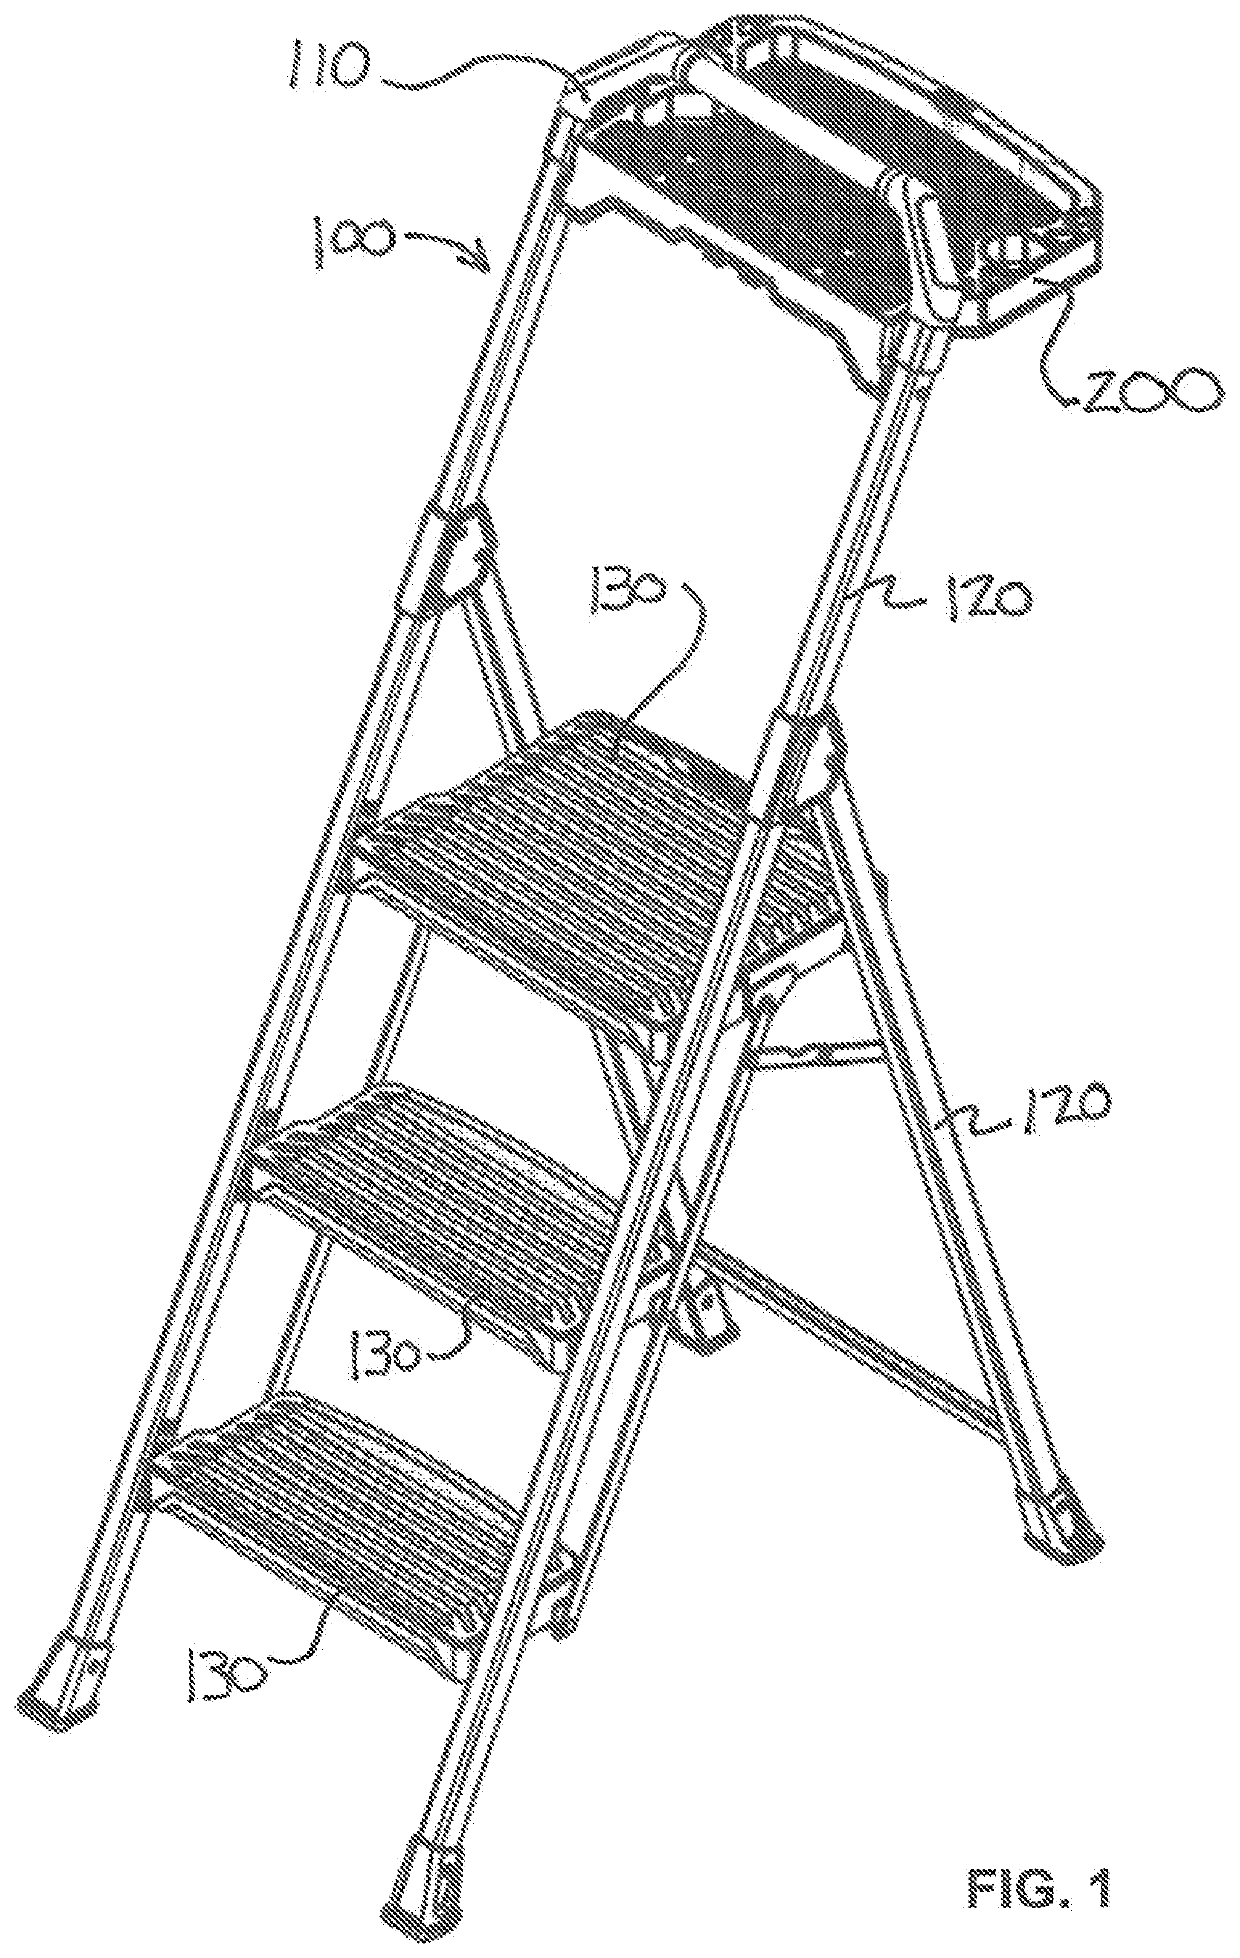 Ladder tray locking mechanism